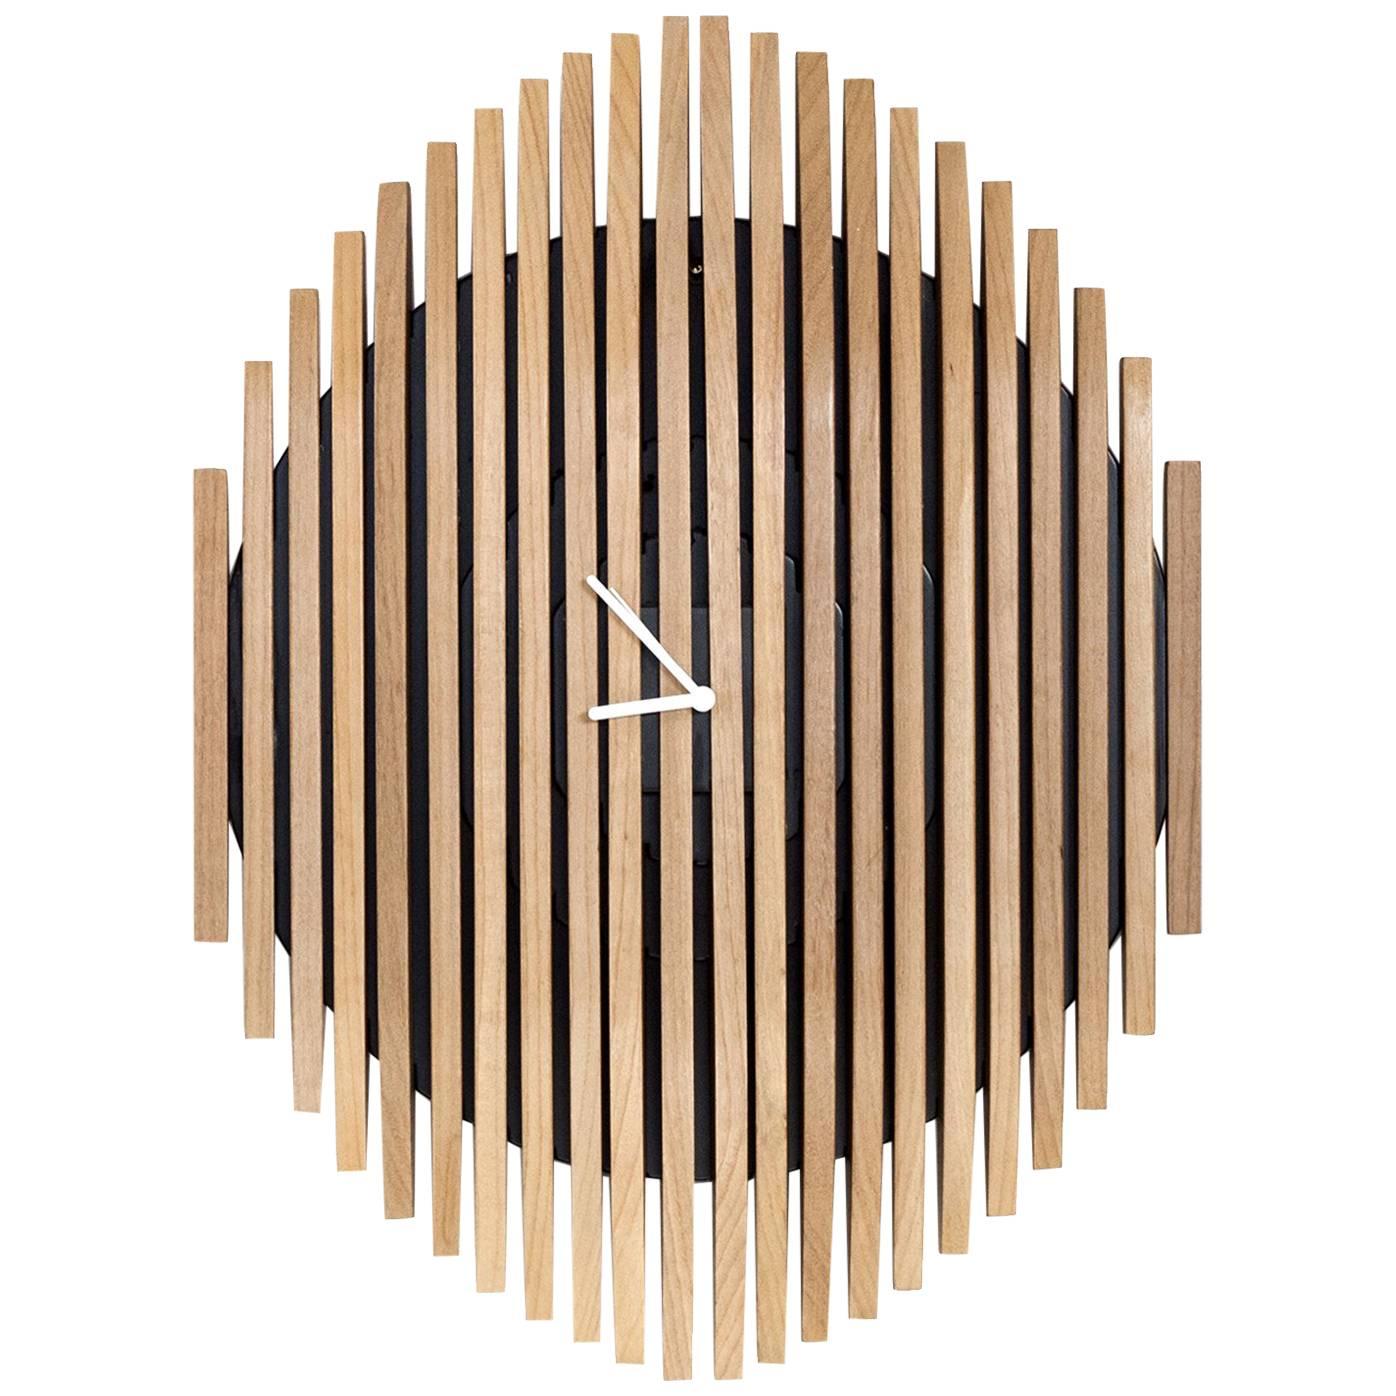 Ozomat Brazilian Contemporary Wood Wall Clock by Lattoog